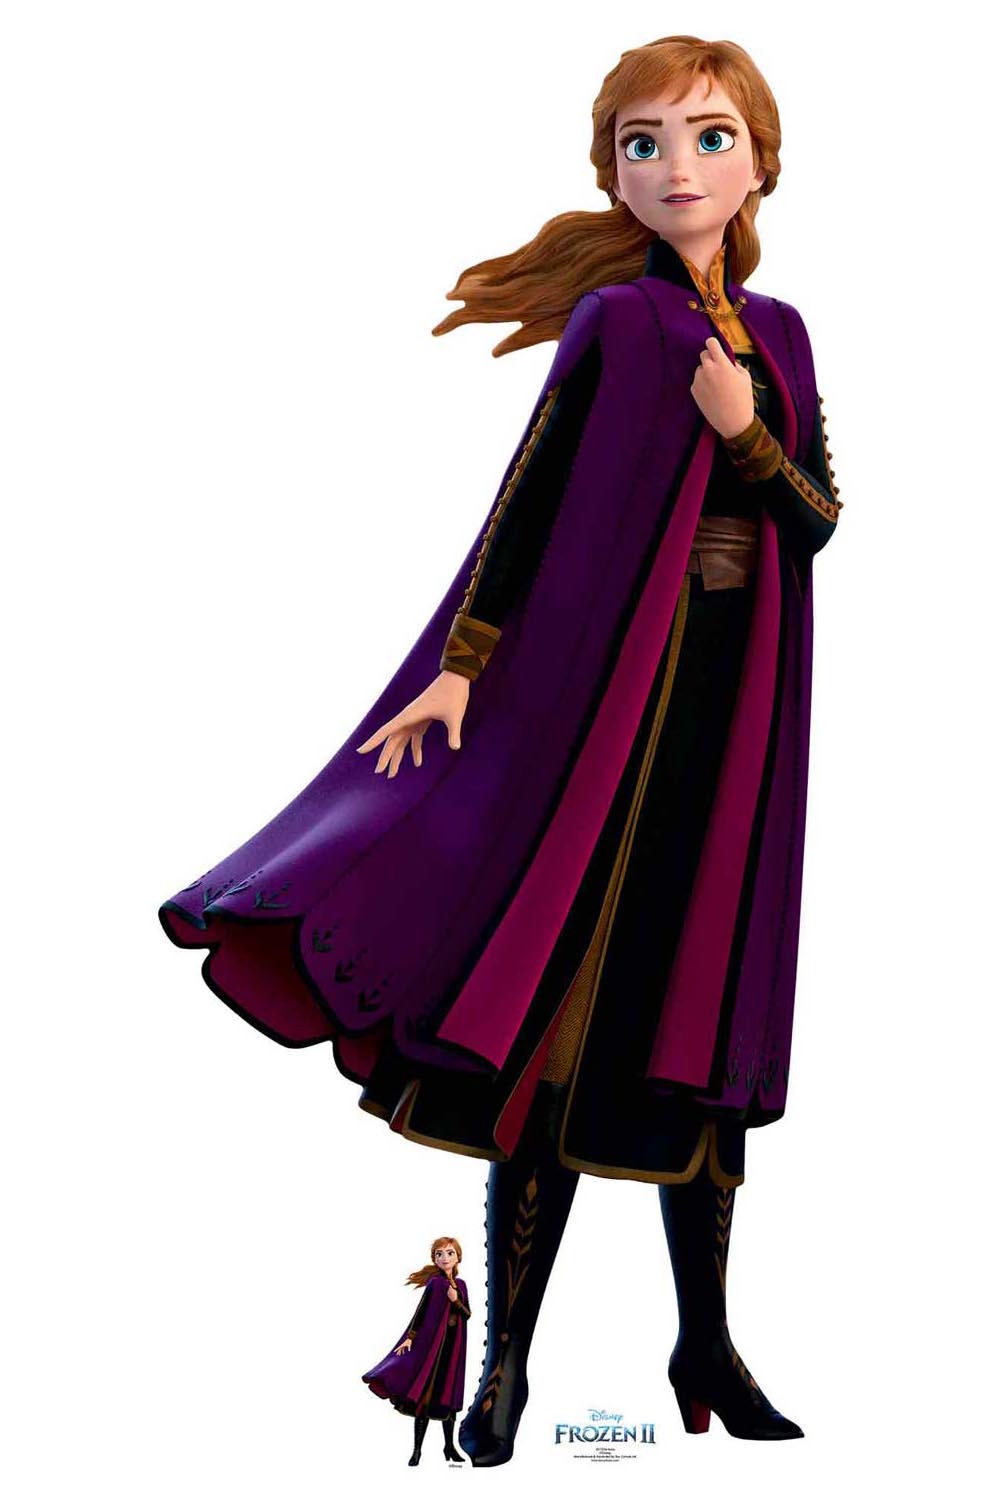 Frozen-2-Anna-purple-velvet-coat-official-cardboard-cutout-buy-now-at-starstills__69976.1571154274.jpg?c=2&imbypass=on